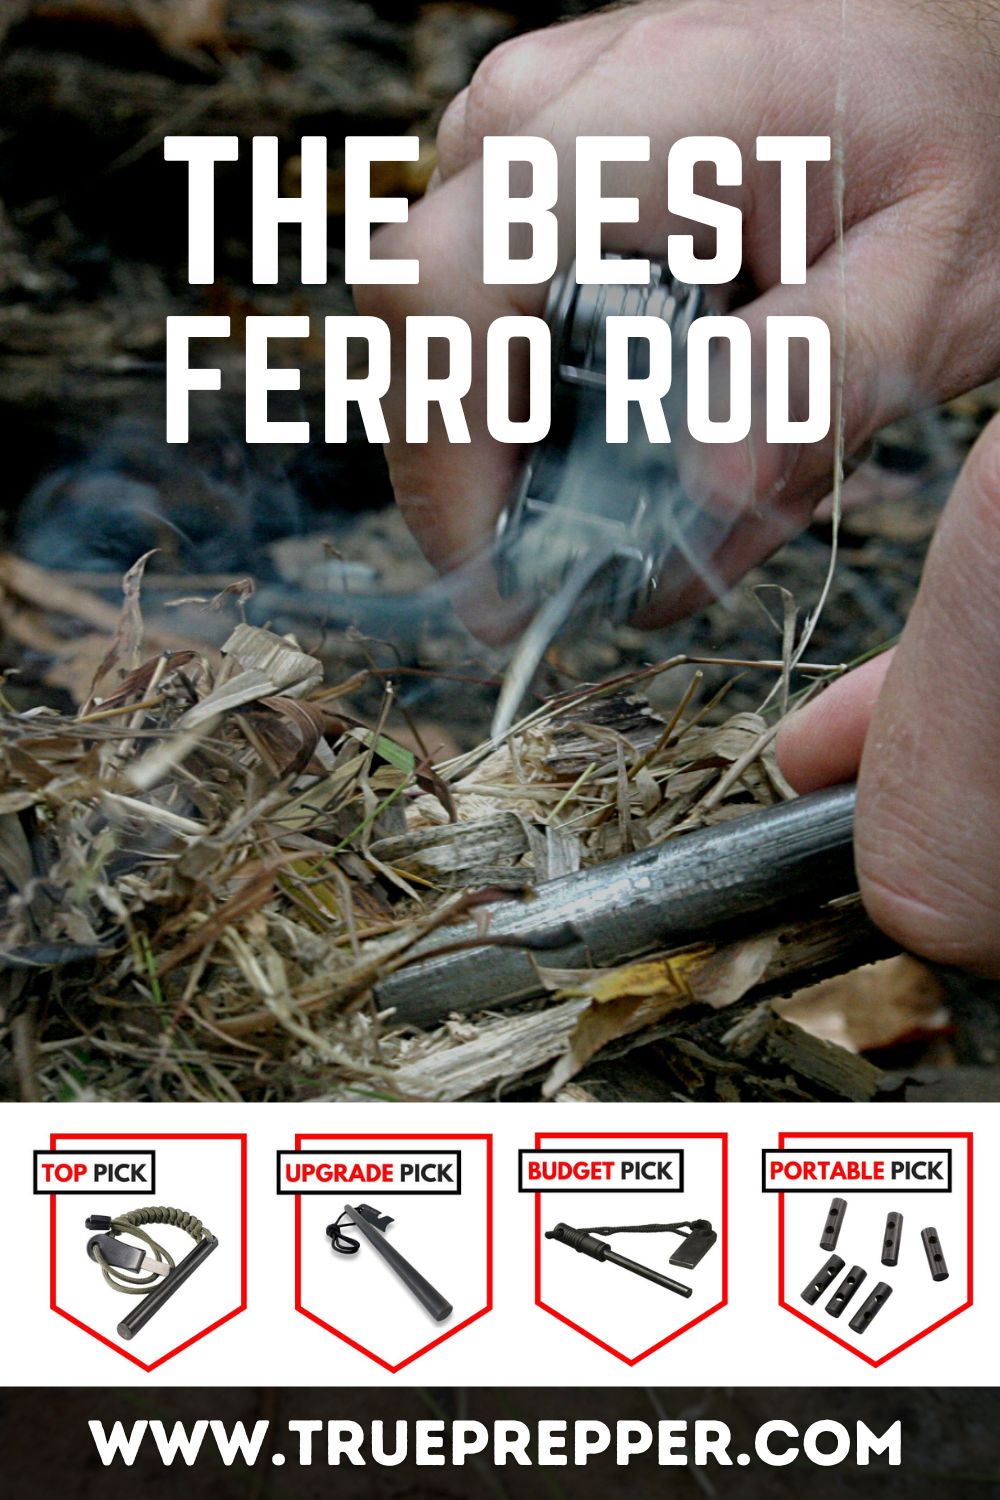 The Best Ferro Rod for Fire Starting